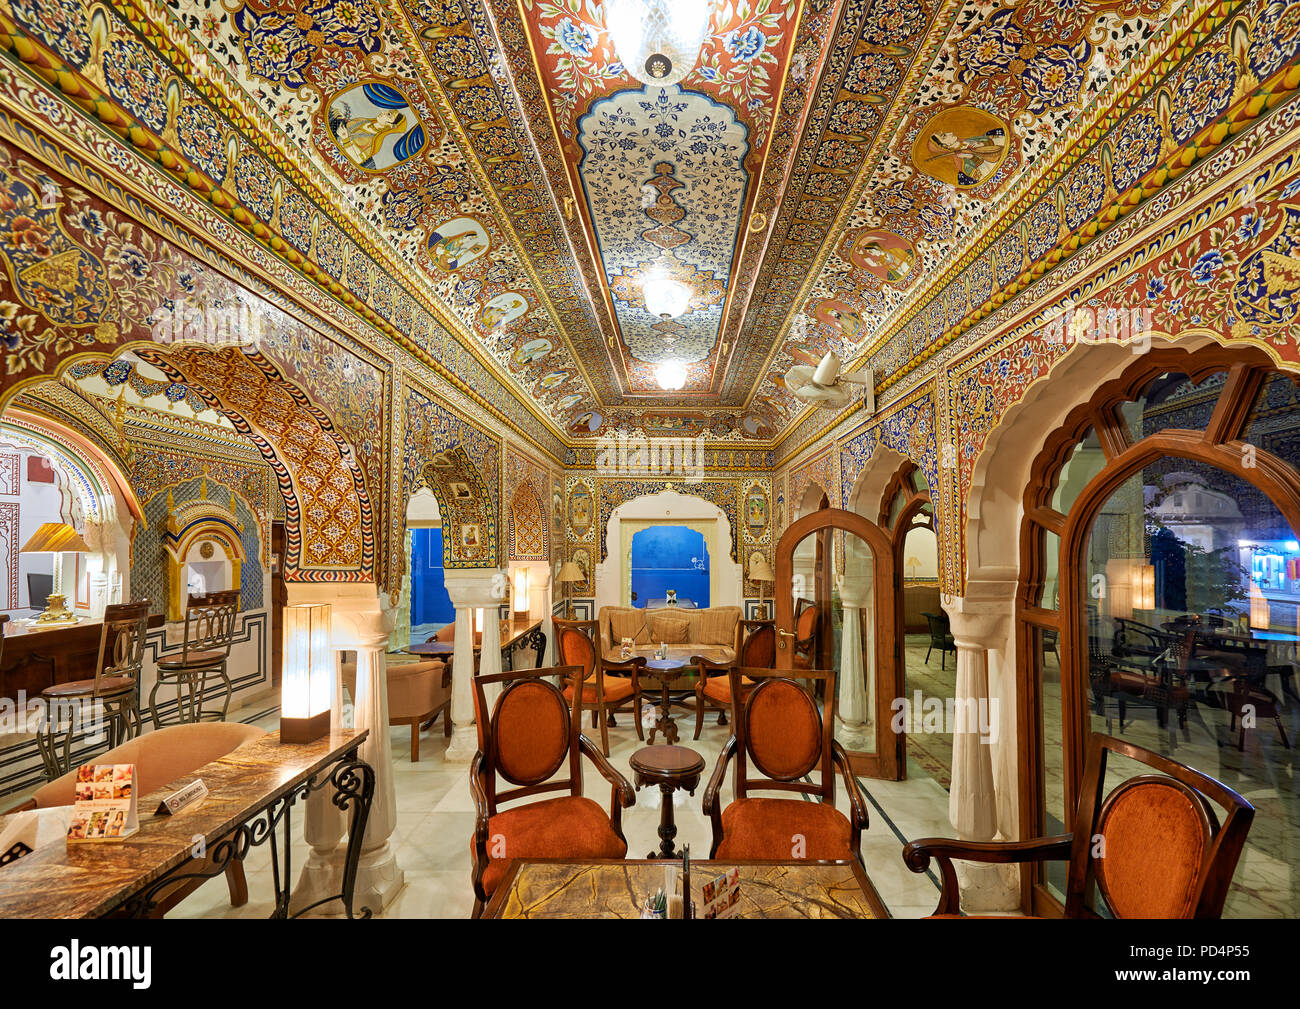 interior shot of wall paintings in Fort and Hotel castle Mandawa, Mandawa, Shekhawati Region, Rajasthan, India Stock Photo